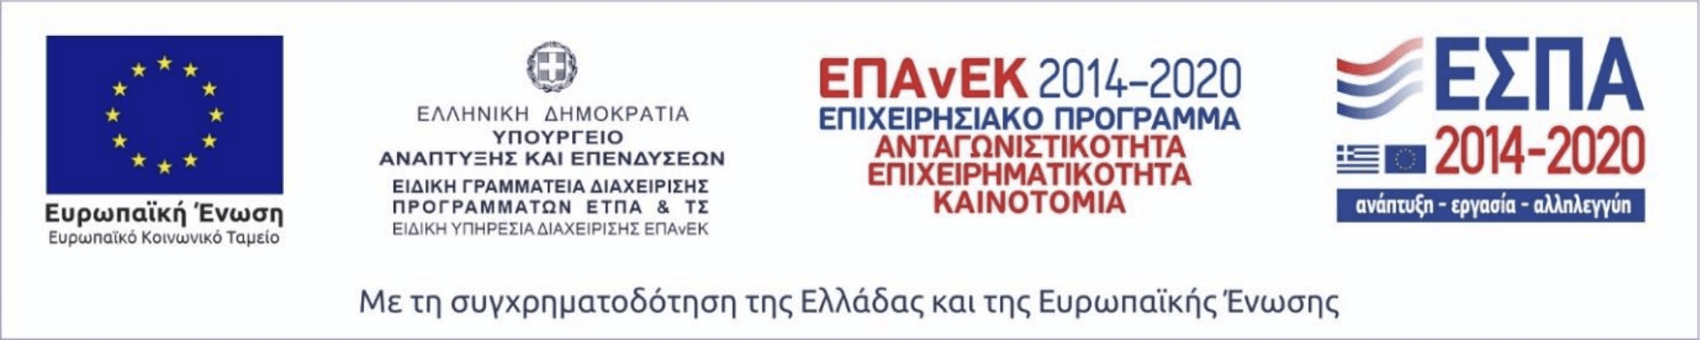 pokk.gr - ESPA Banner